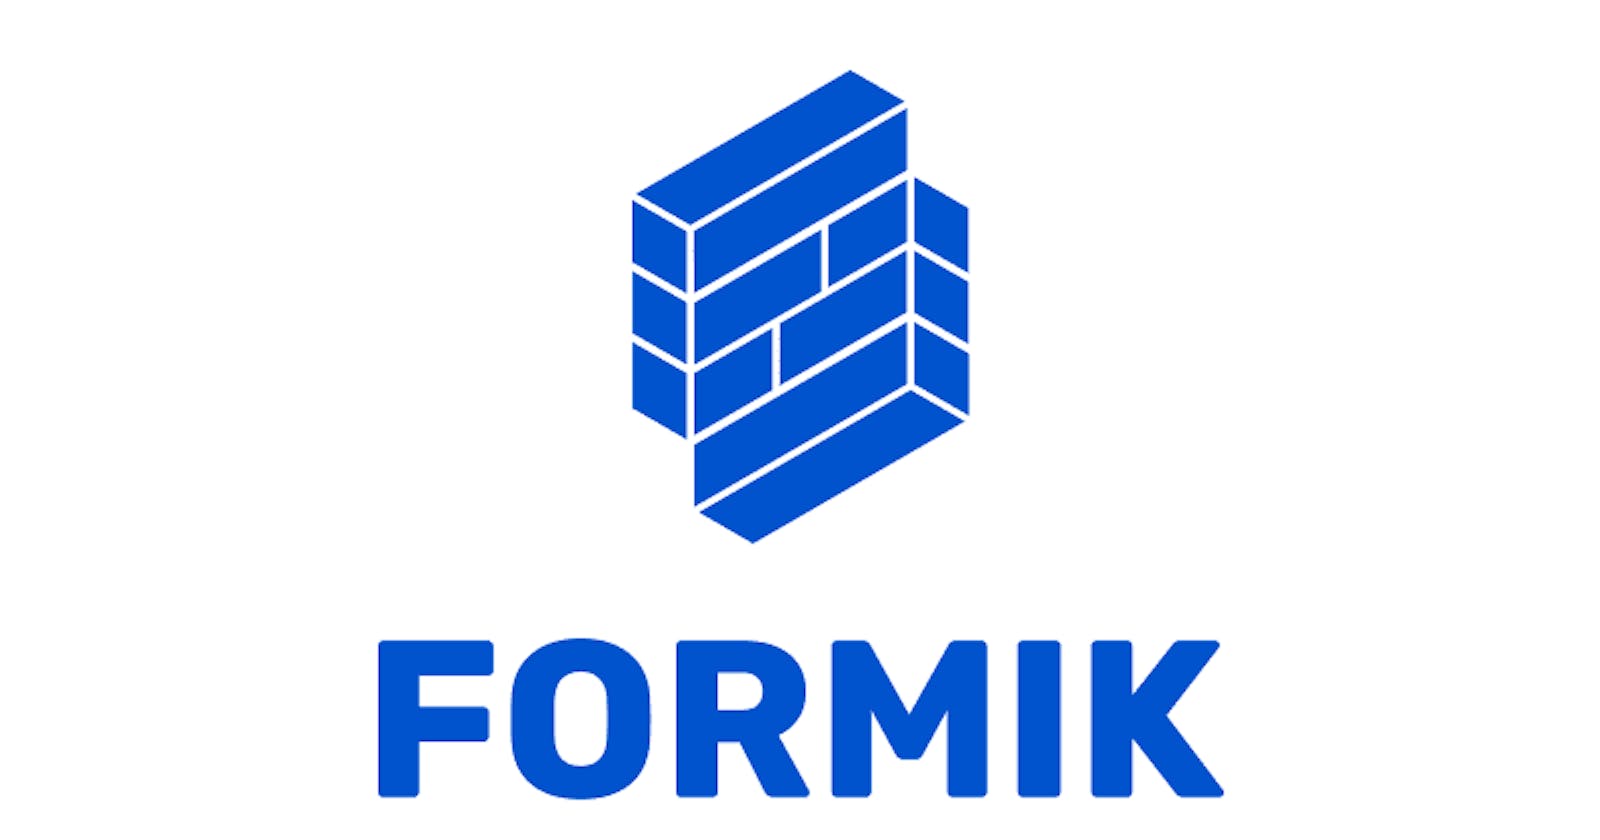 Sending validation errors through a Formik form